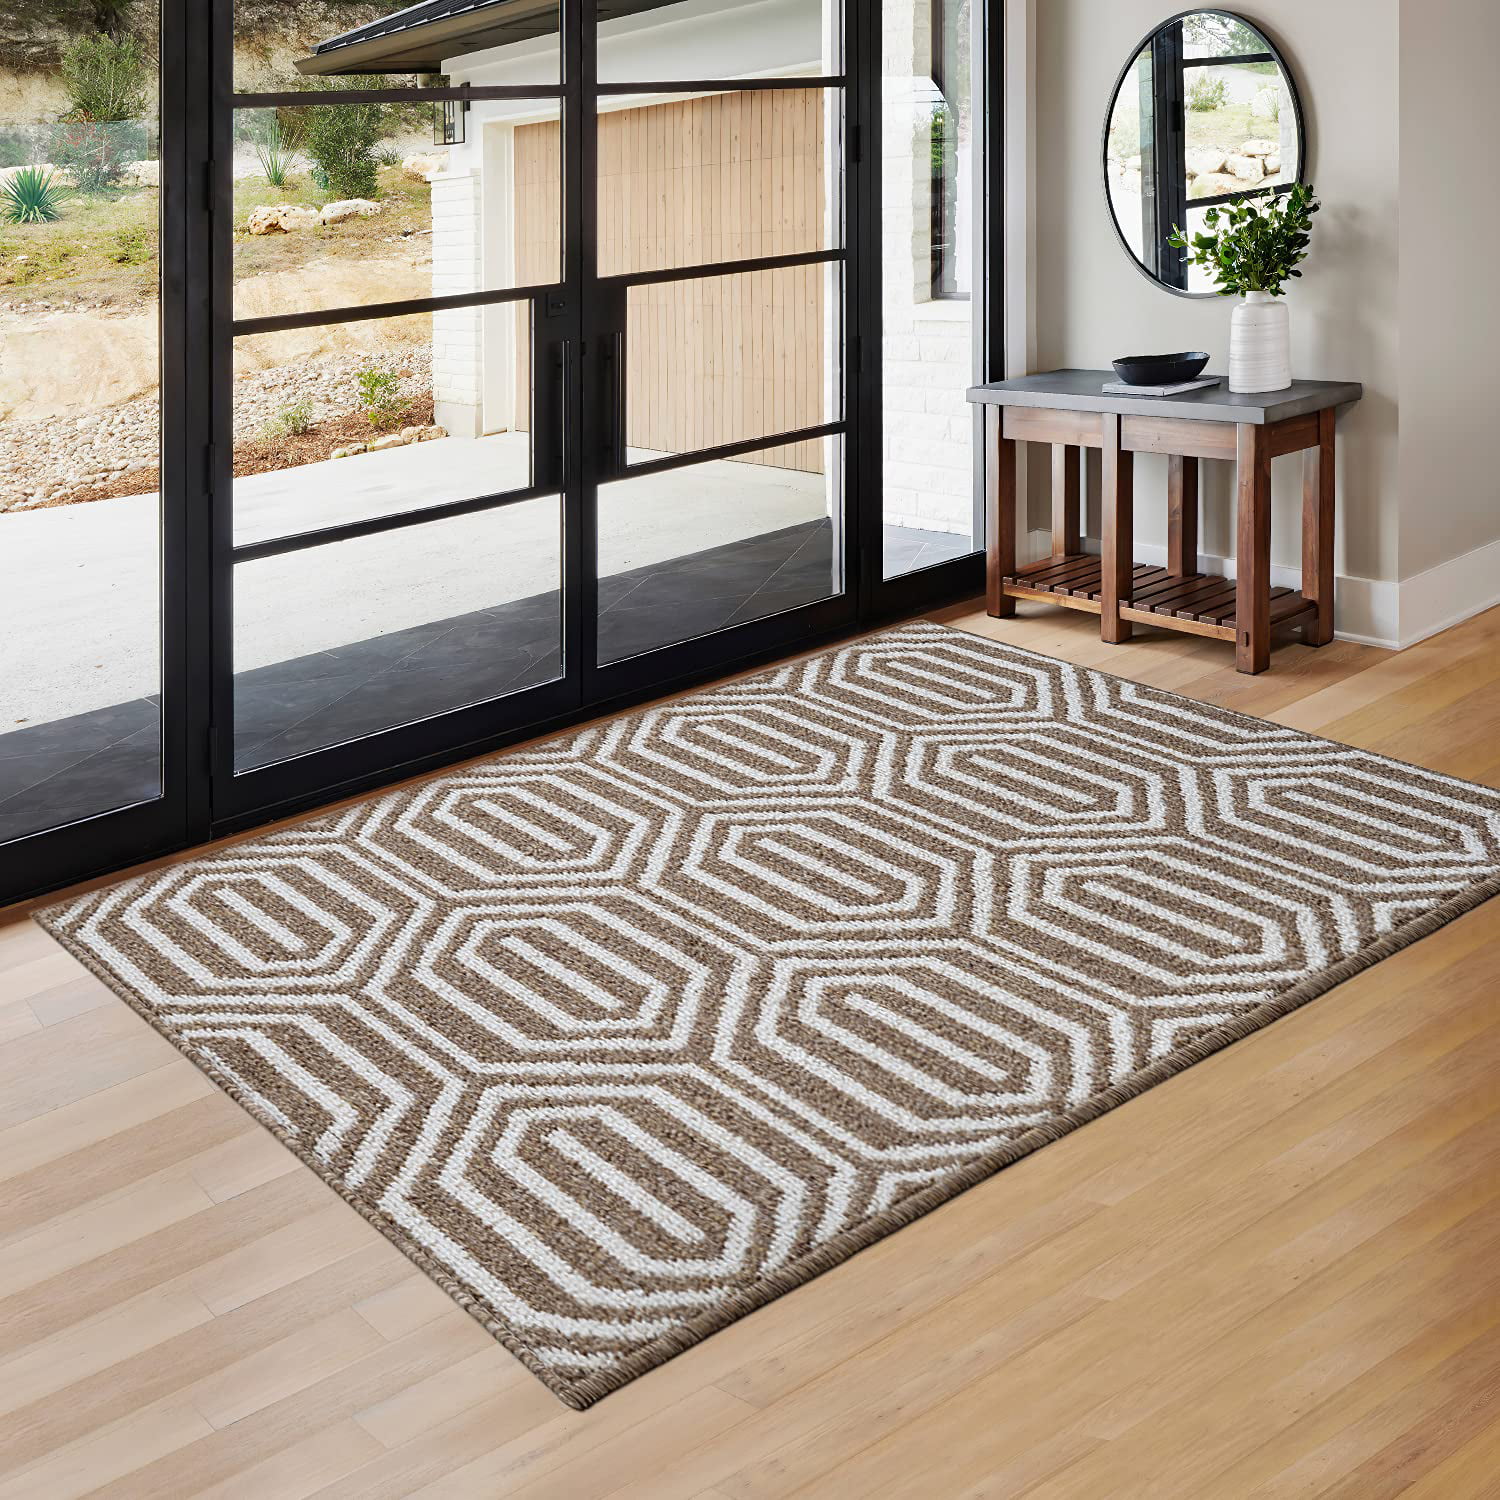 Doormats for Outdoor Entrance Home Absorbent and Drain Away Water Heavy  Duty Entryway Mat Front Back Door Rugs Pastoral Carpet